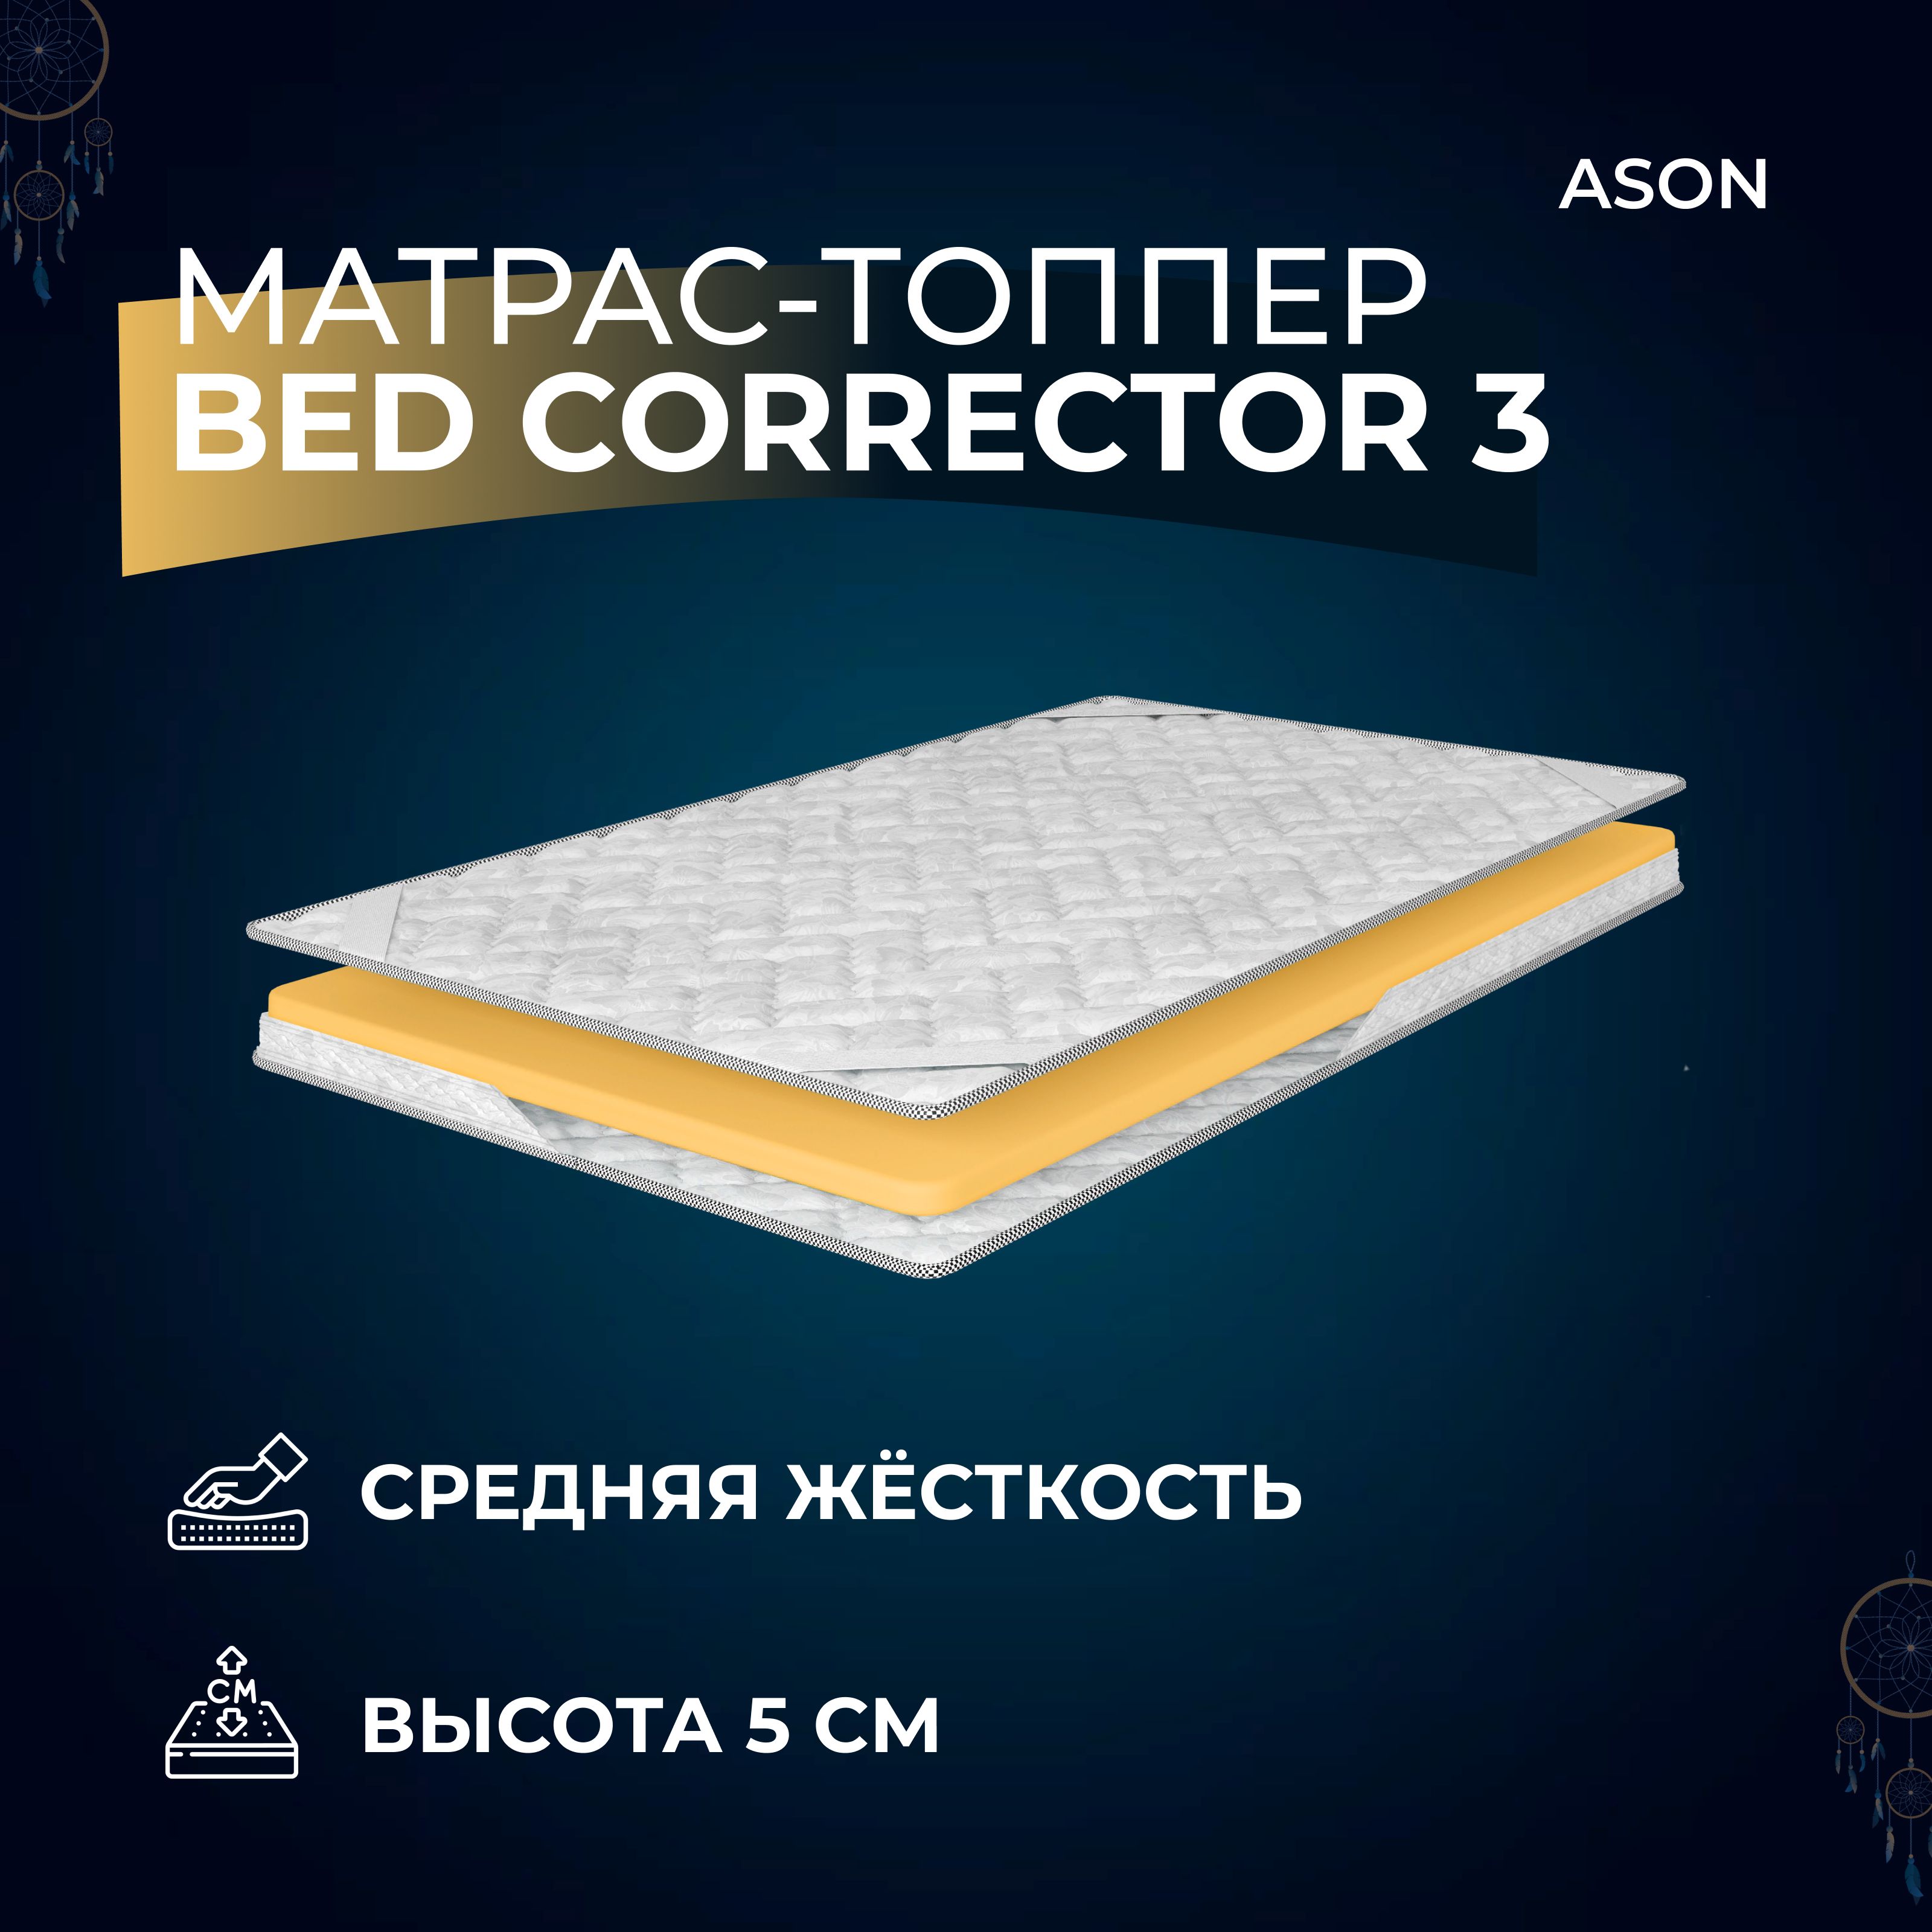 Матрас-топпер 170х190 Ason, Bed corrector 3